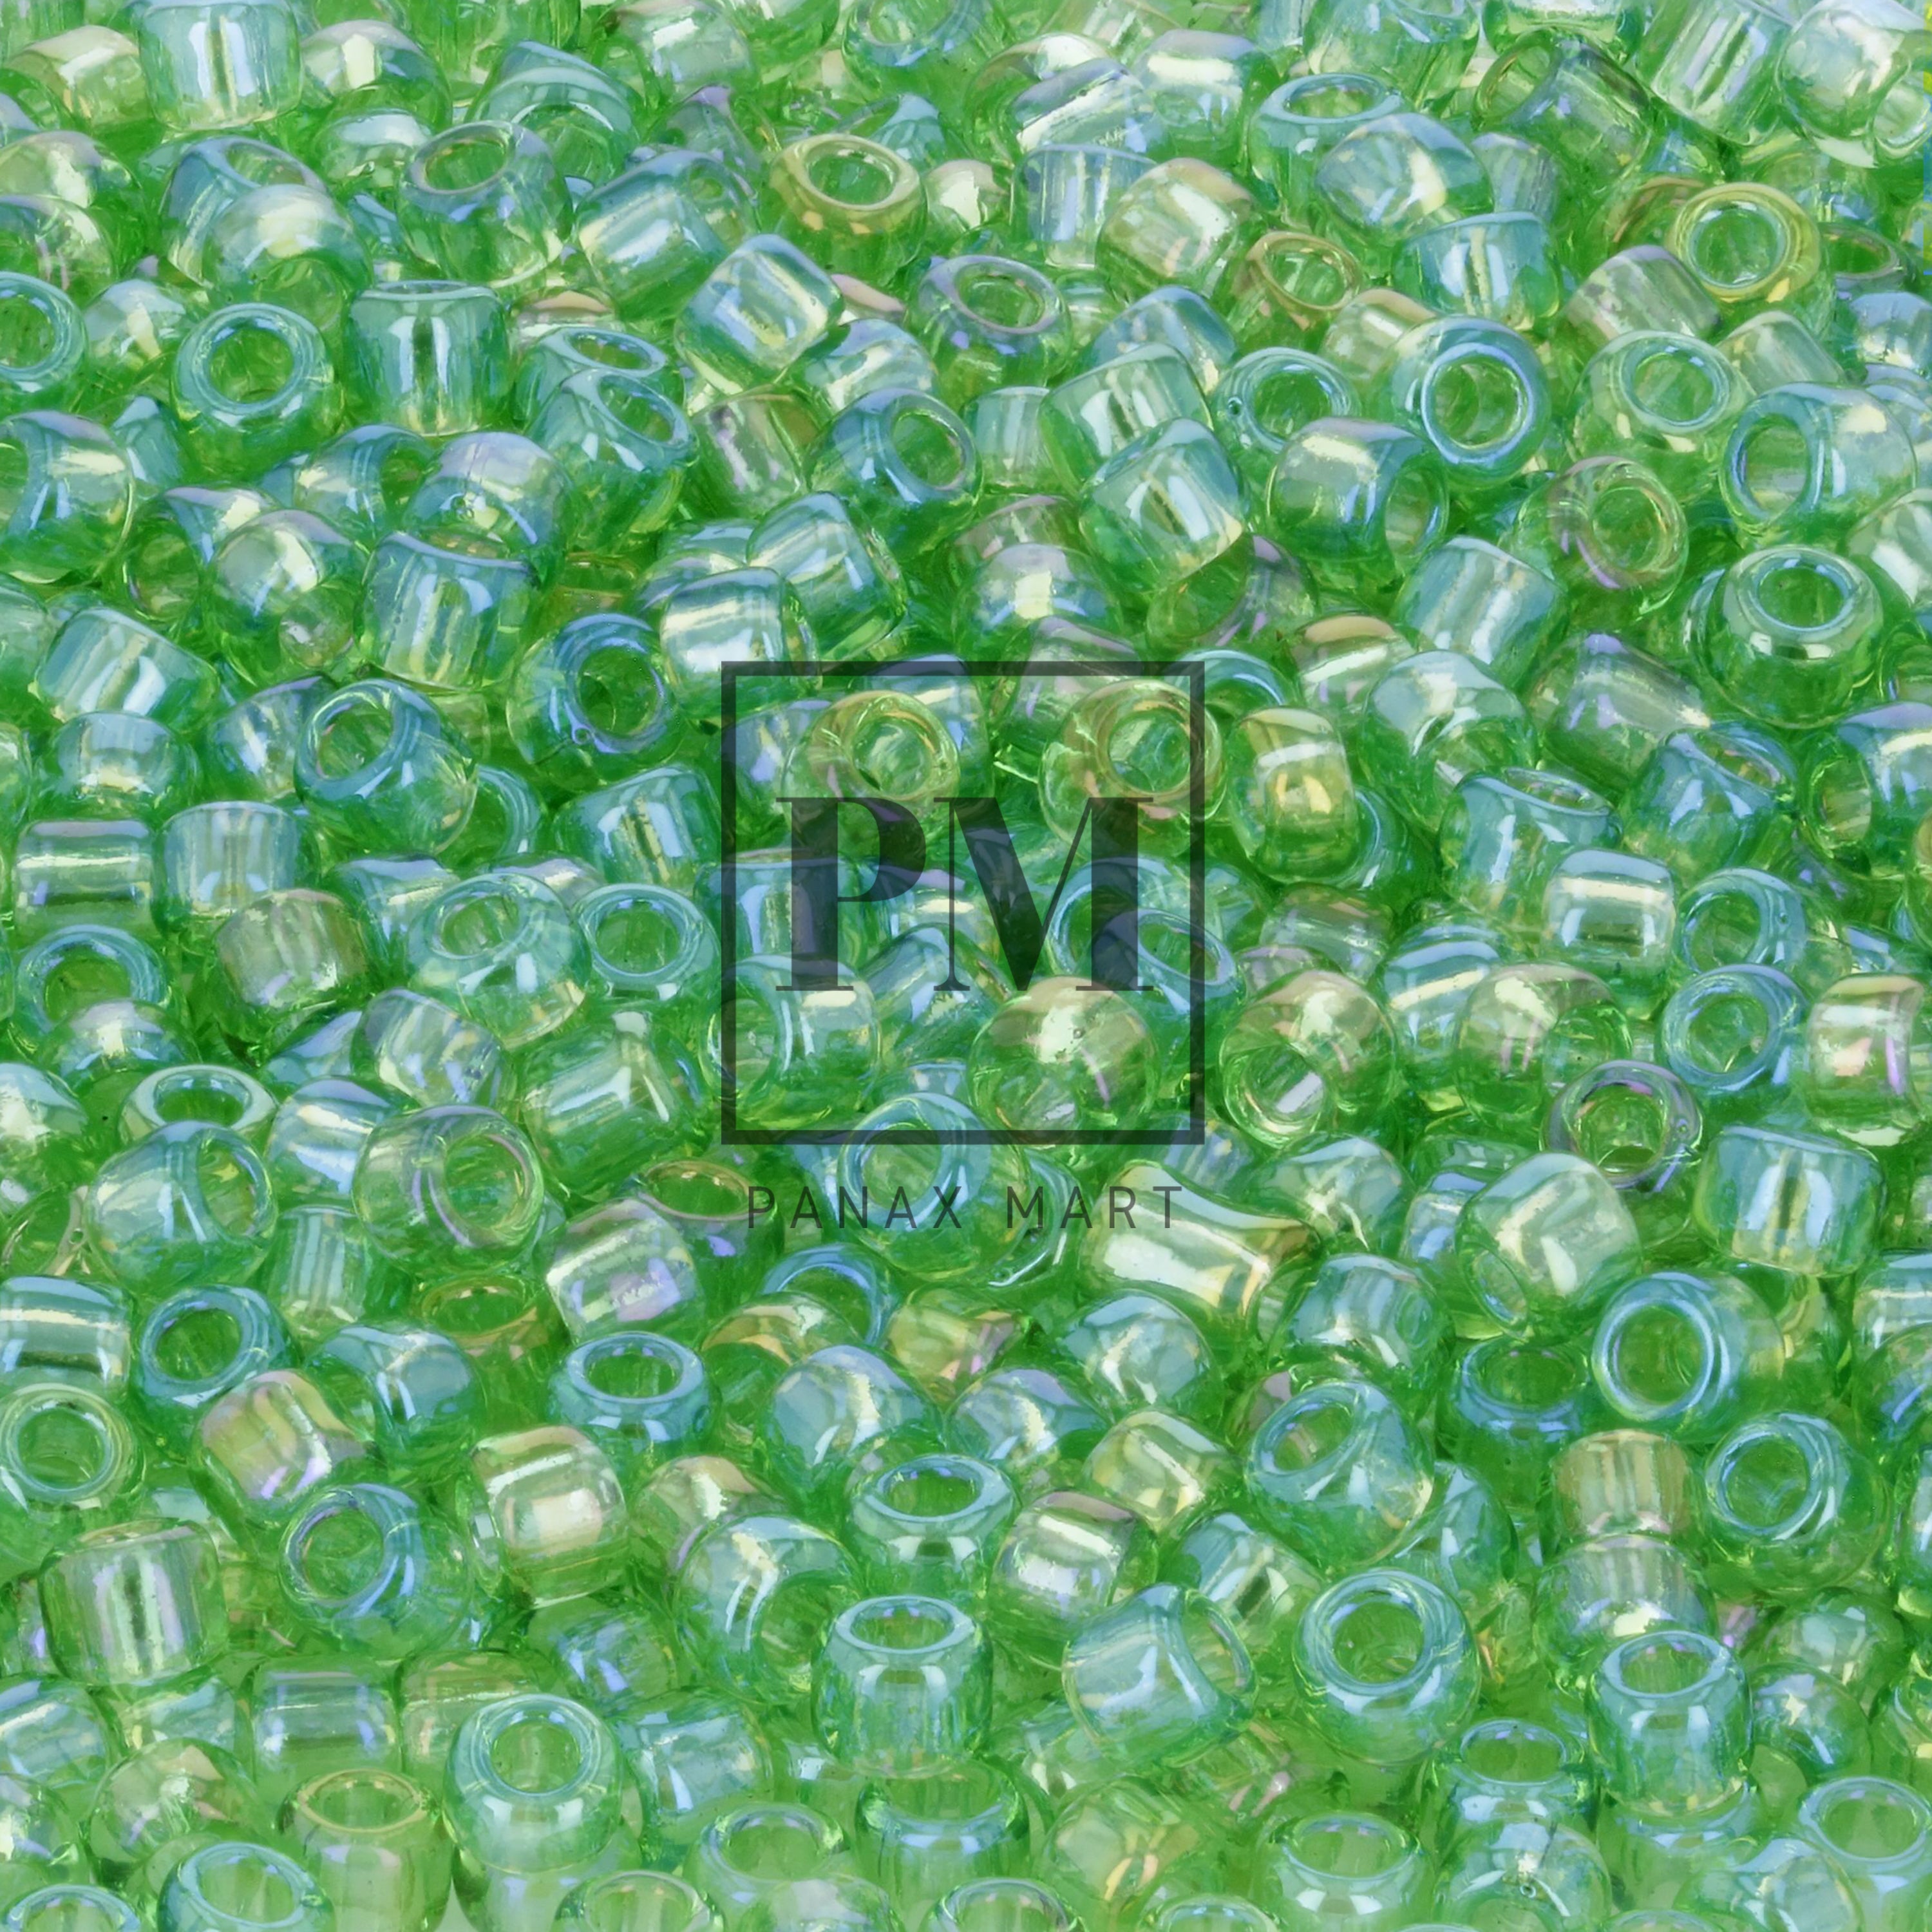 Matsuno Glass Beads (MGB) 11/0 RR 19R - Panax Mart